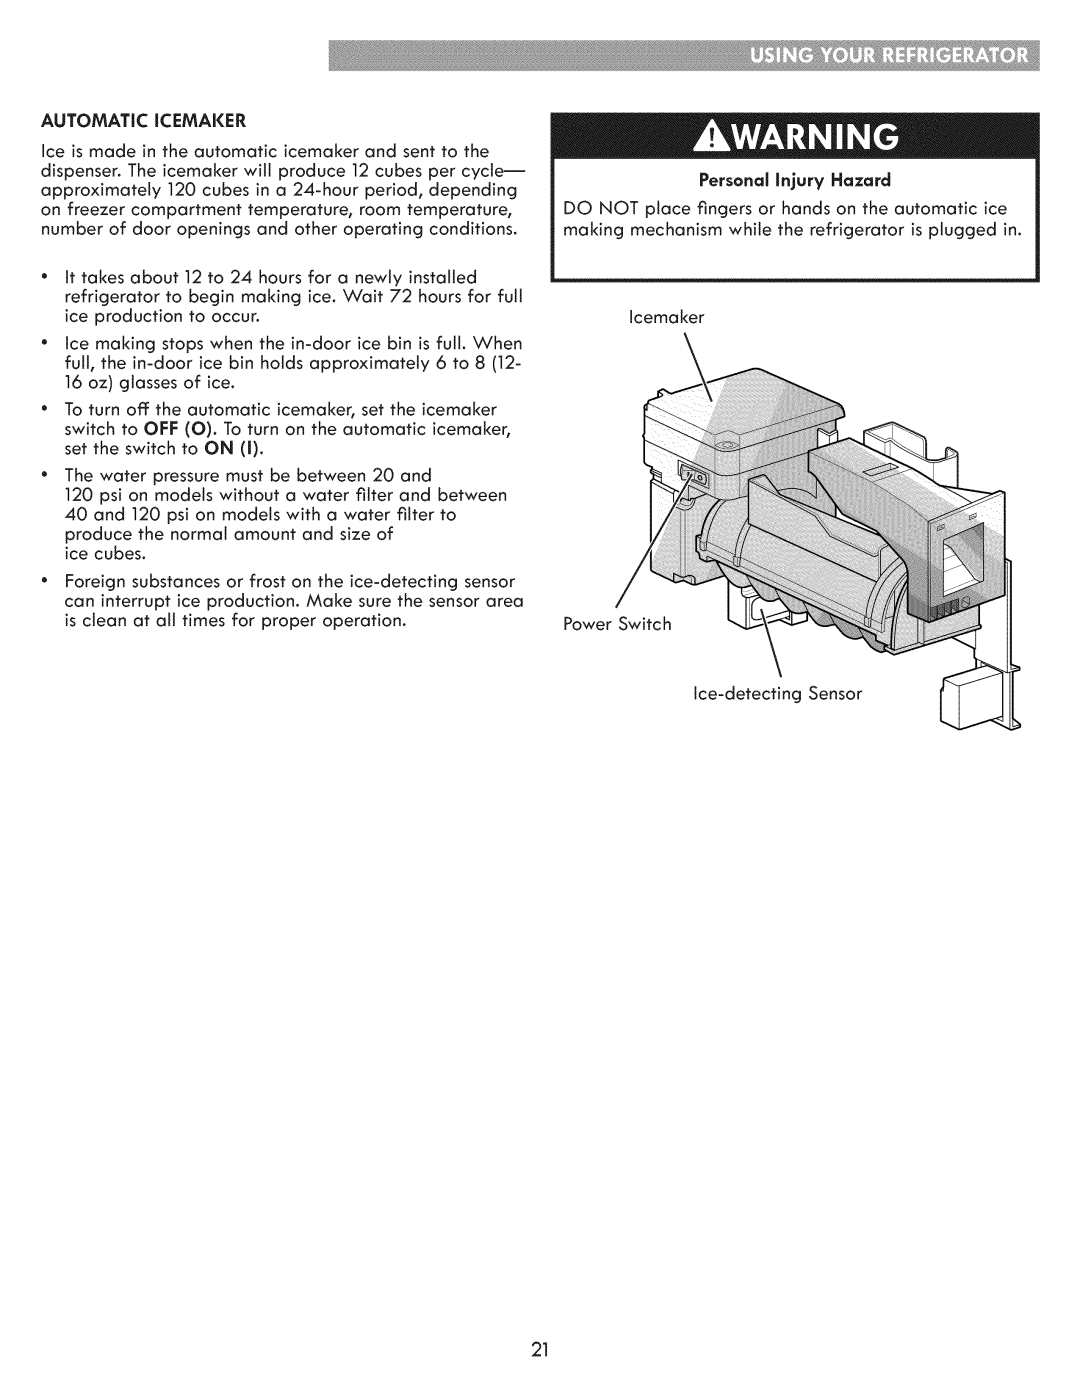 Kenmore 795.7205 manual Automatic Icemaker, Personal Injury Hazard 